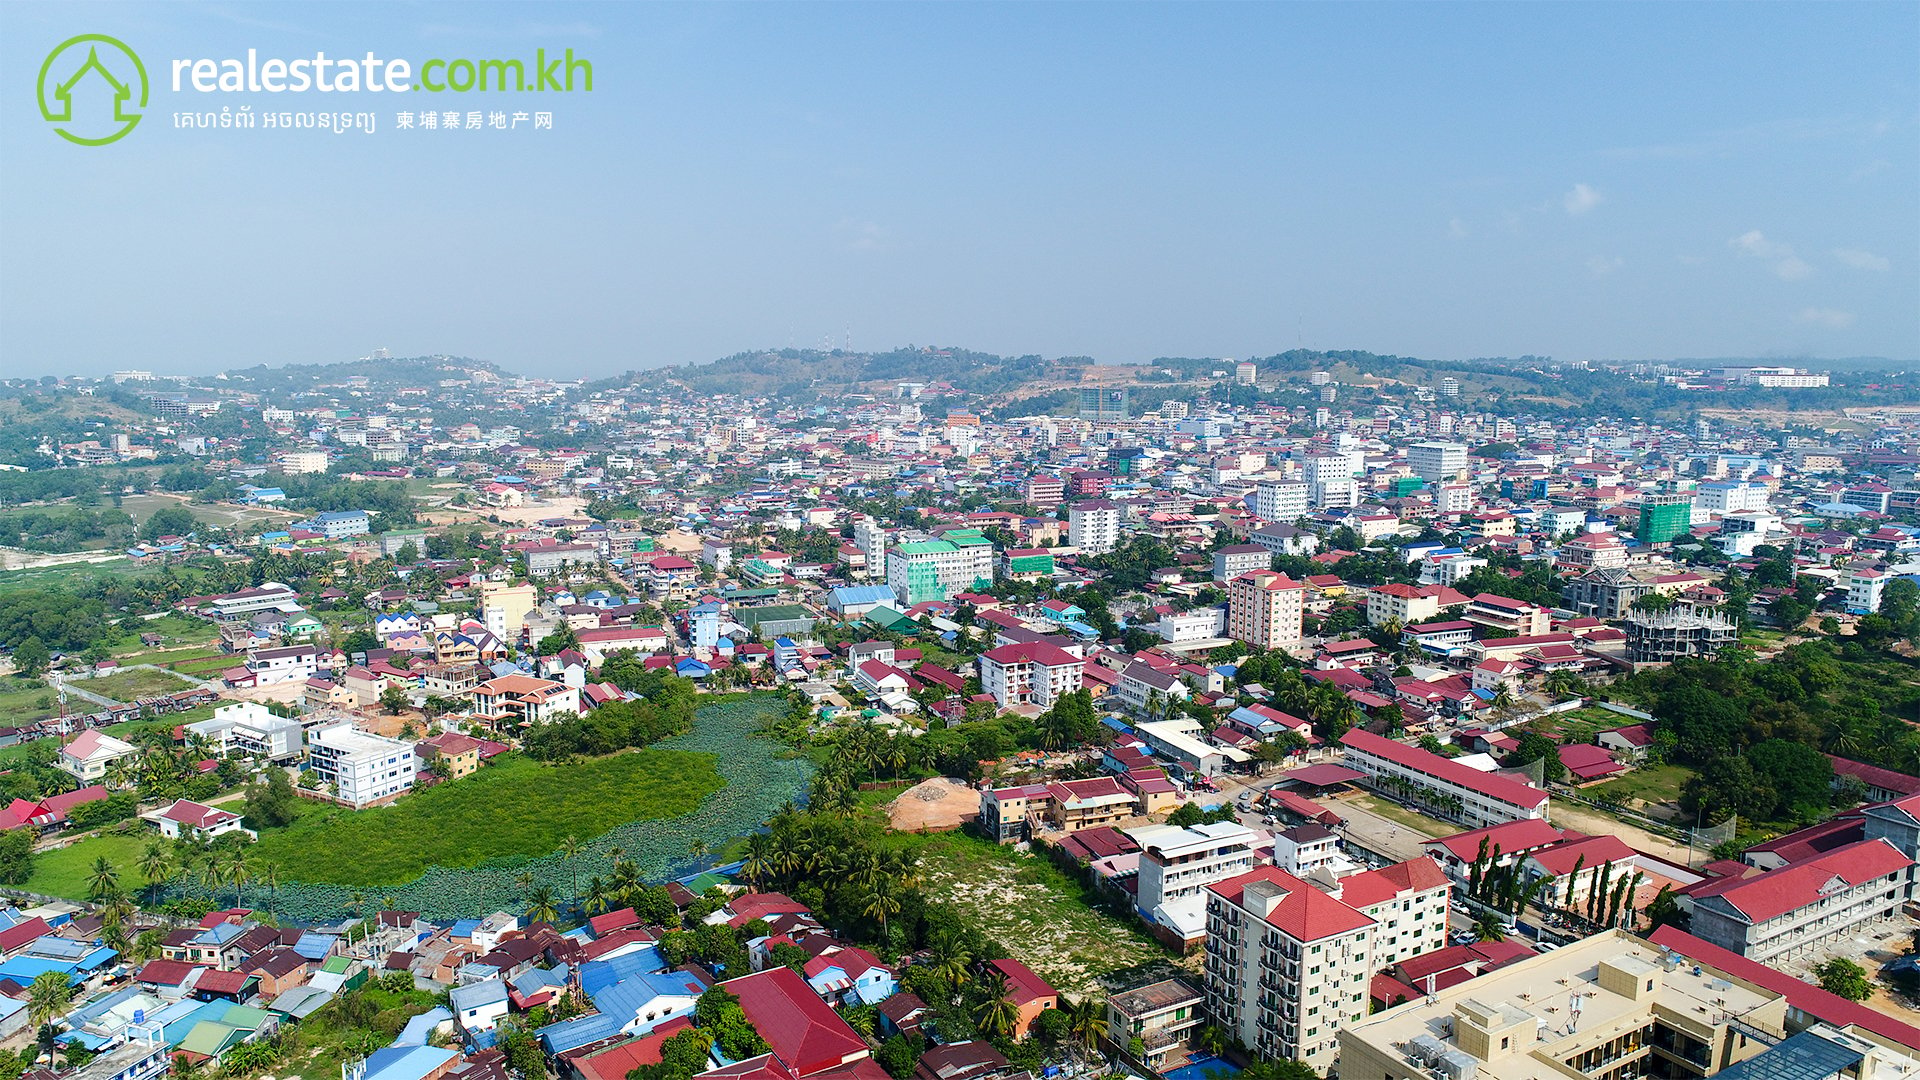 Property experts discuss Sihanoukville’s transformation